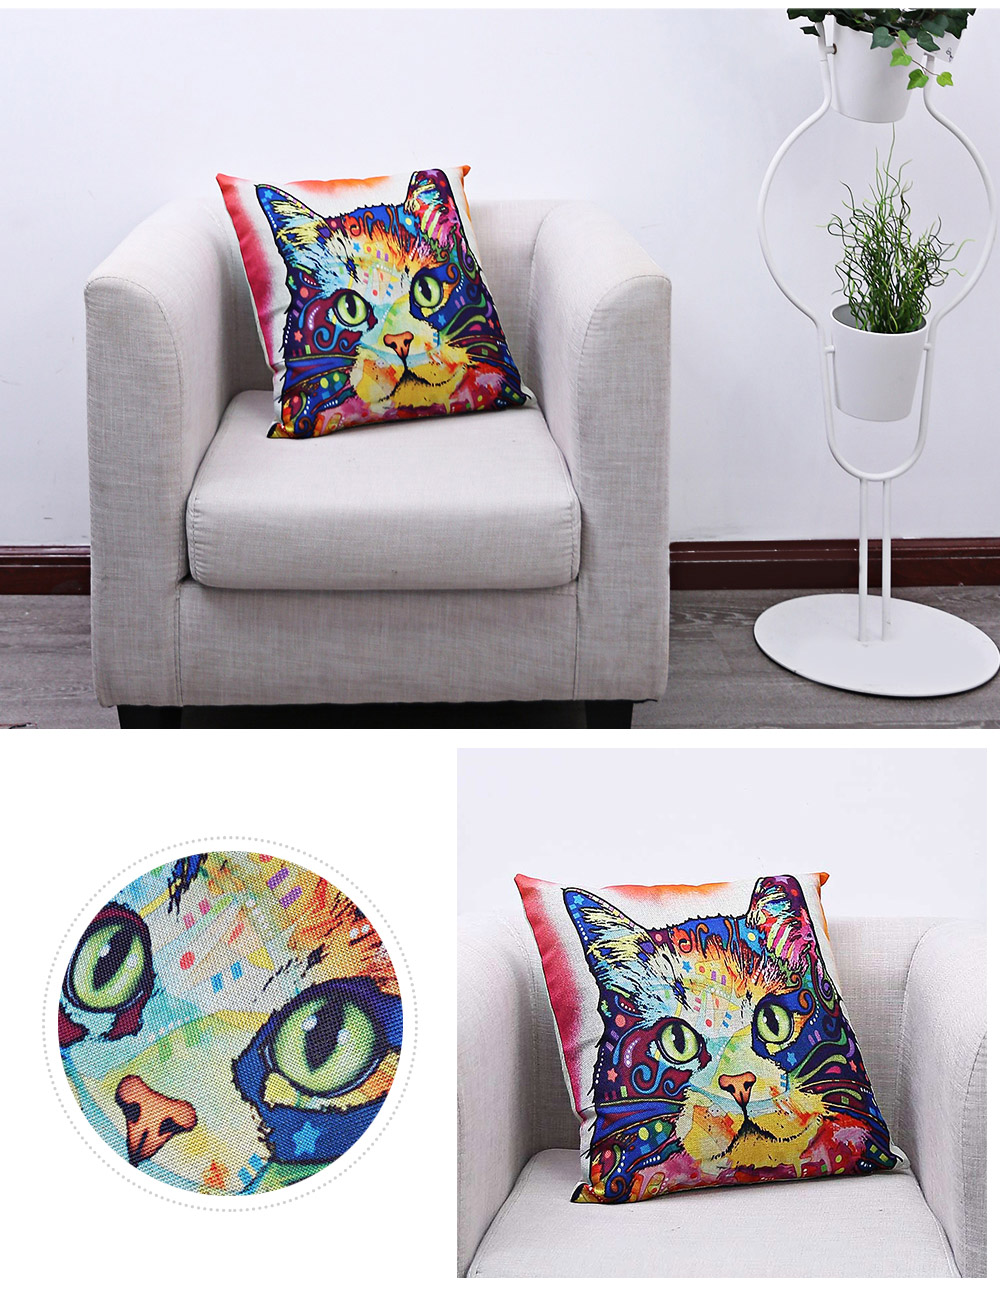 45 x 45CM Colorful Cartoon Cat Printed Cushion Cover Cotton Linen Pillow Case Home Decor